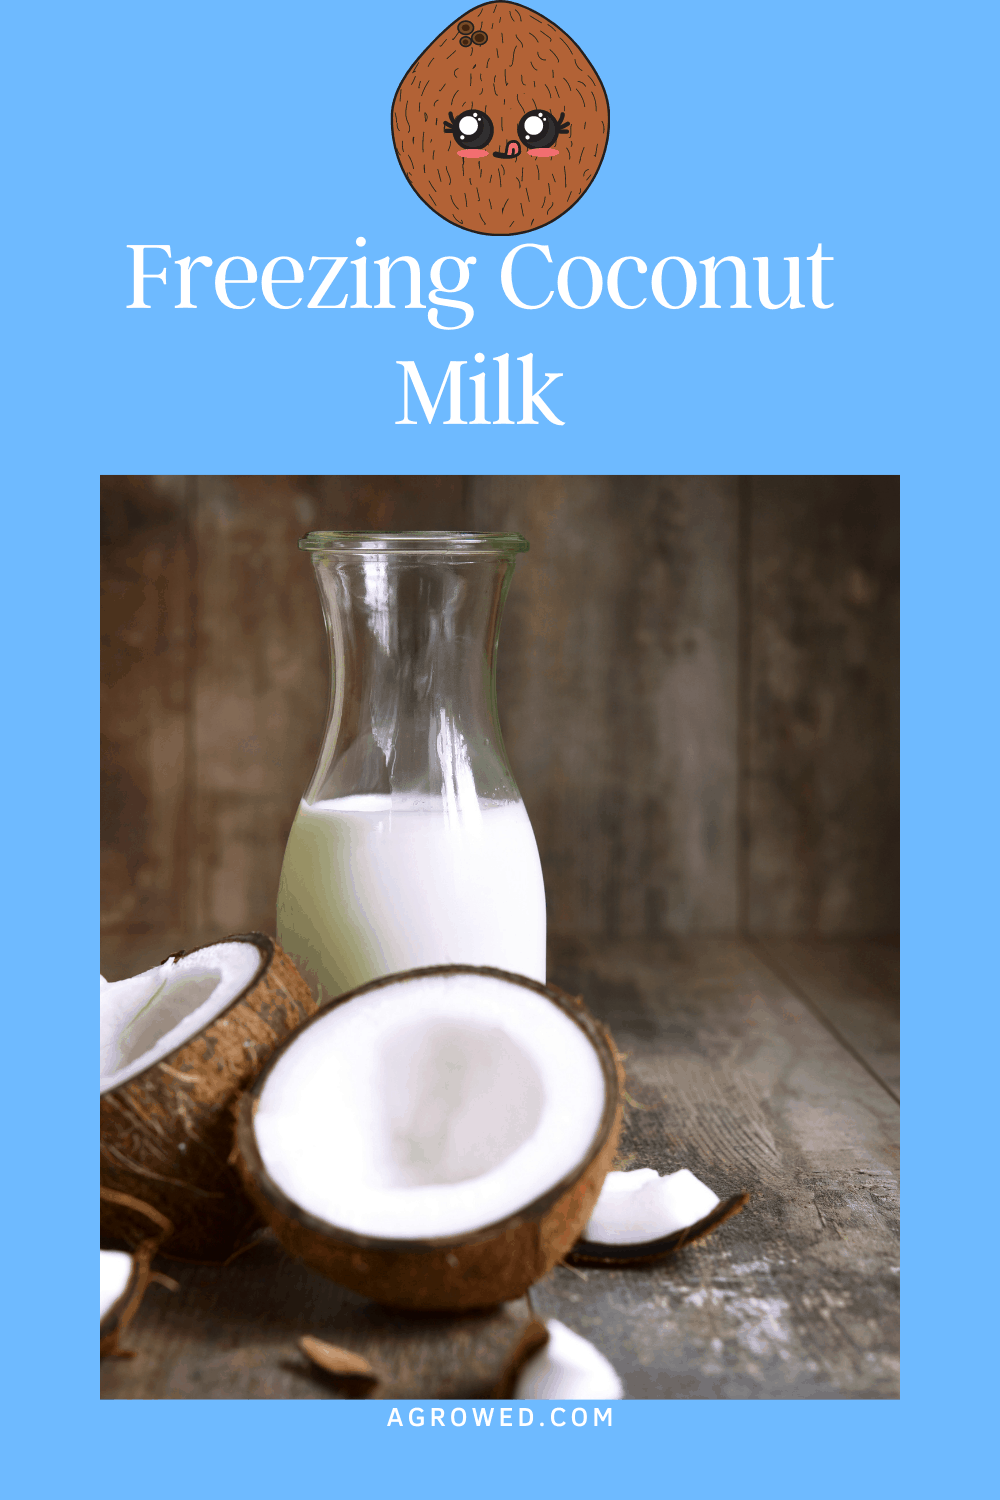 Freezing Coconut Milk